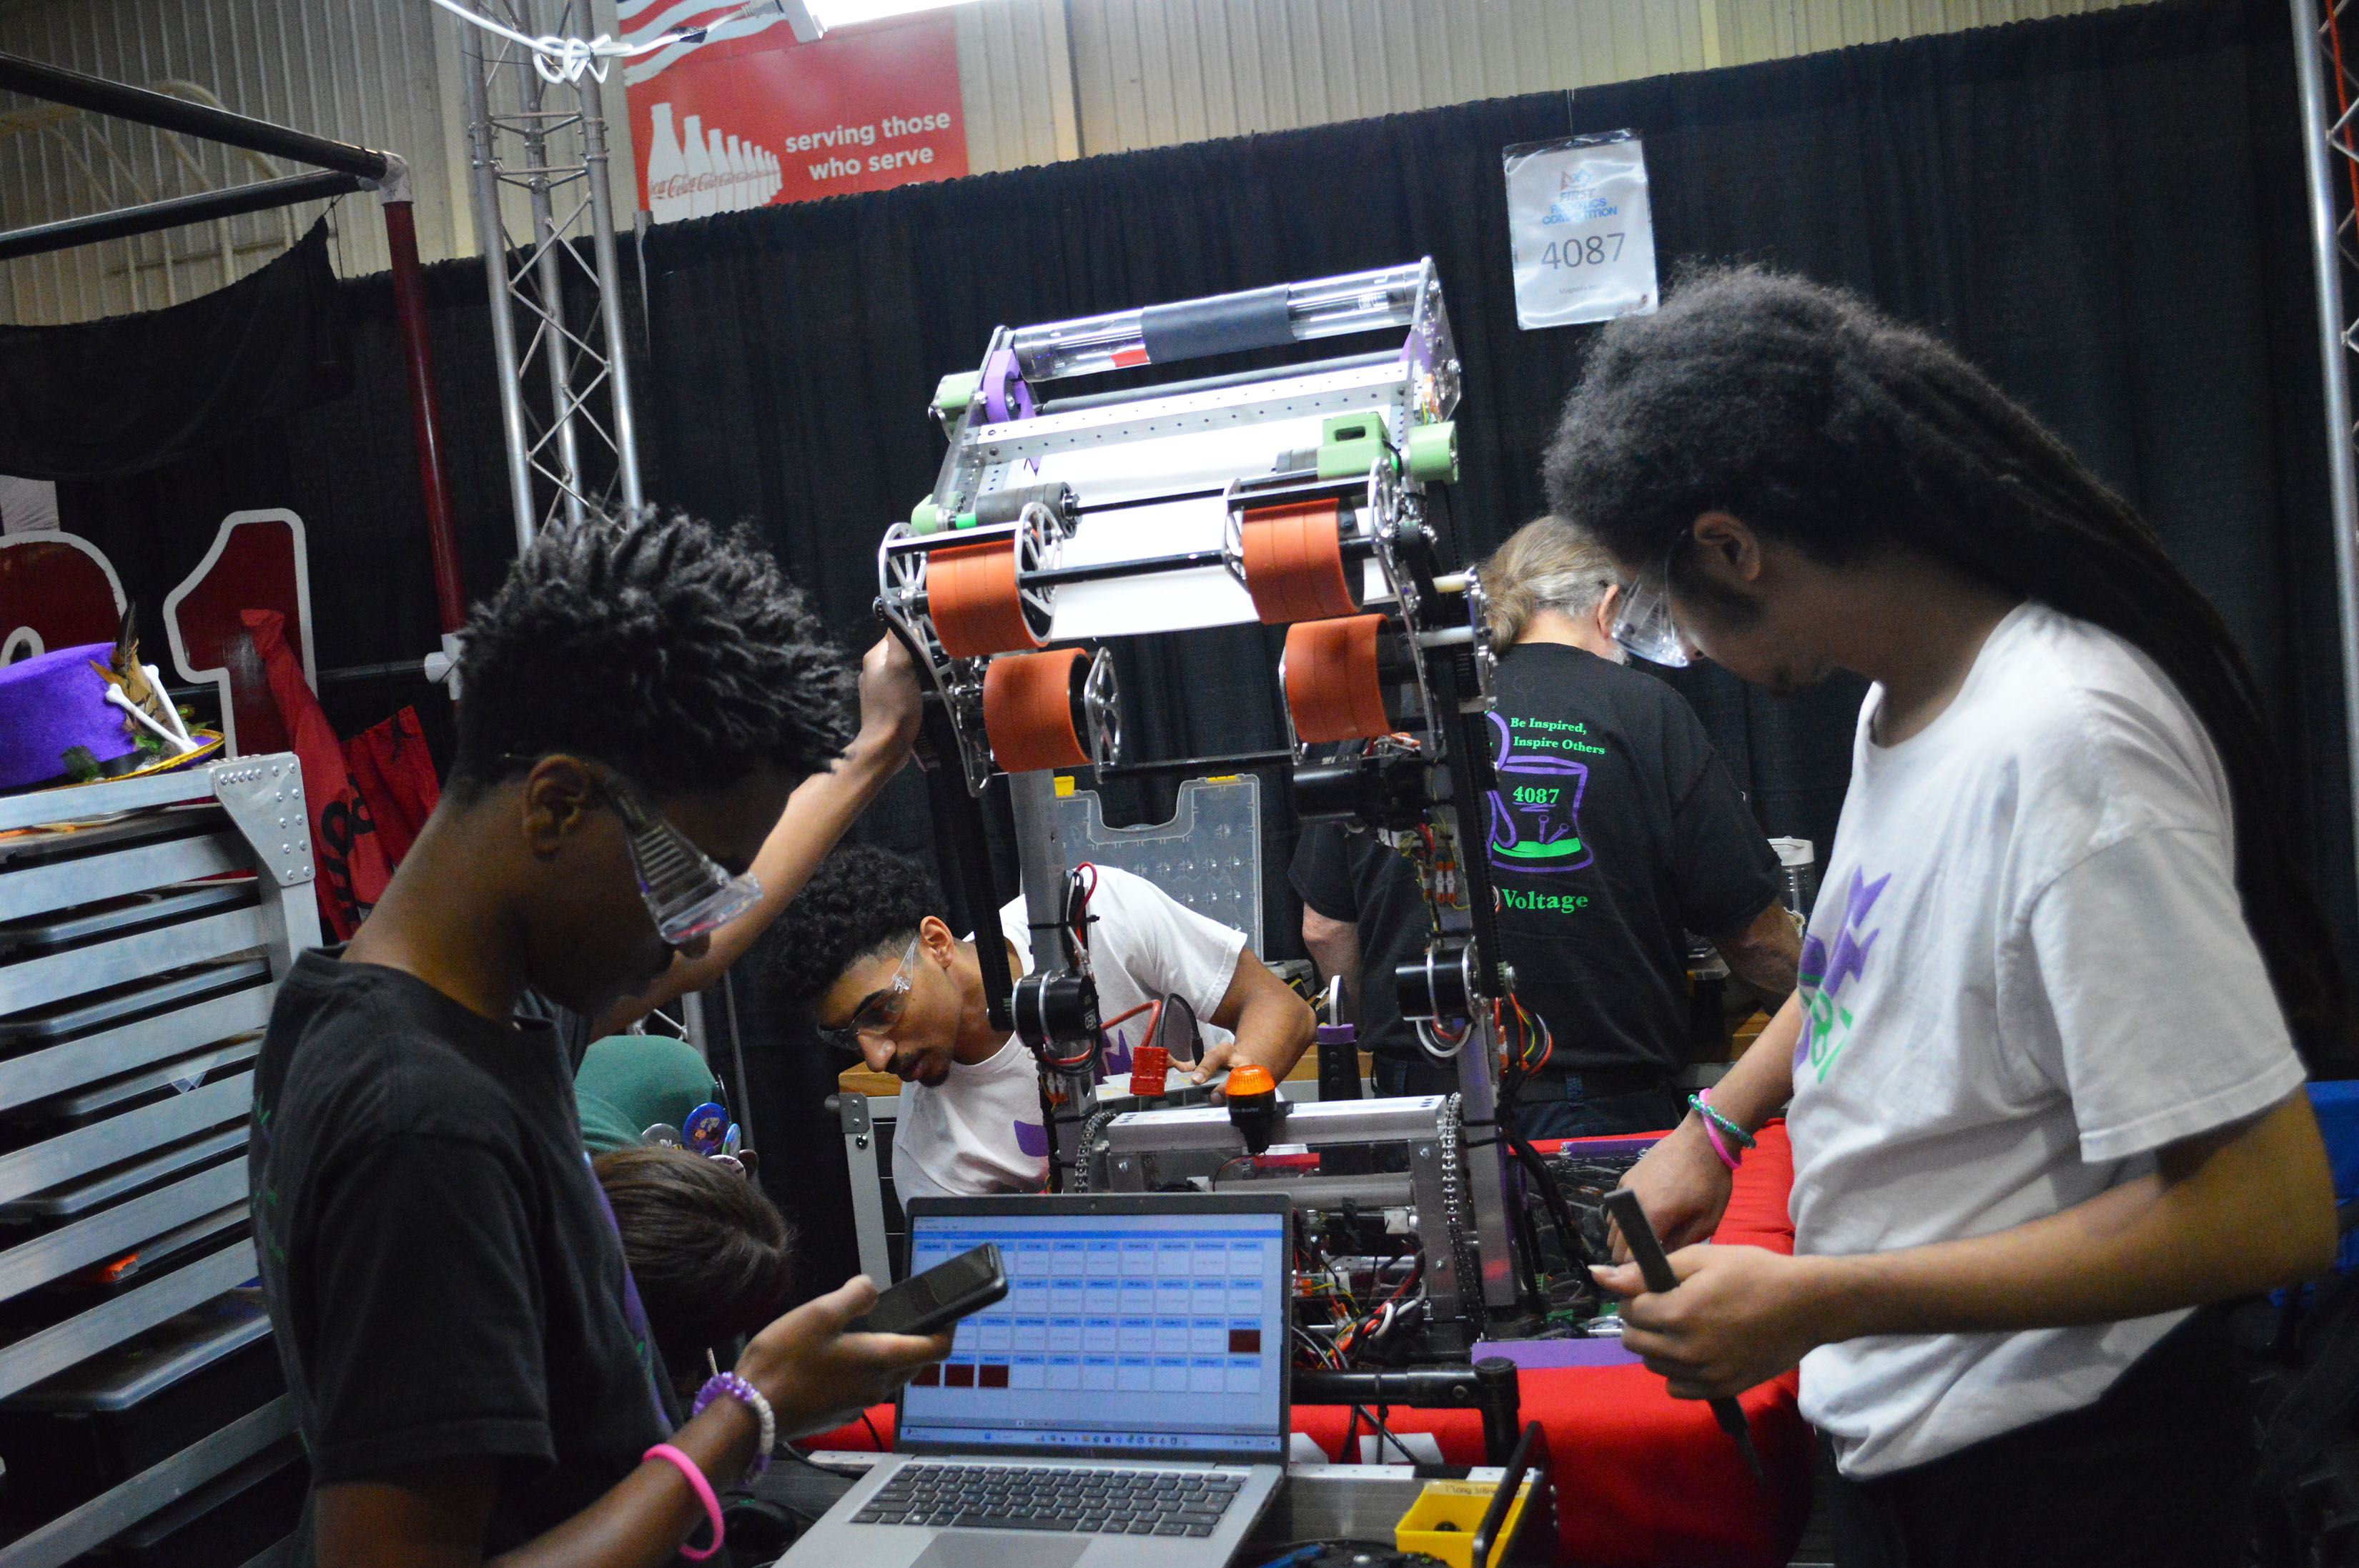 Voodoo Voltage, a New Orleans robotics team, works on their robot